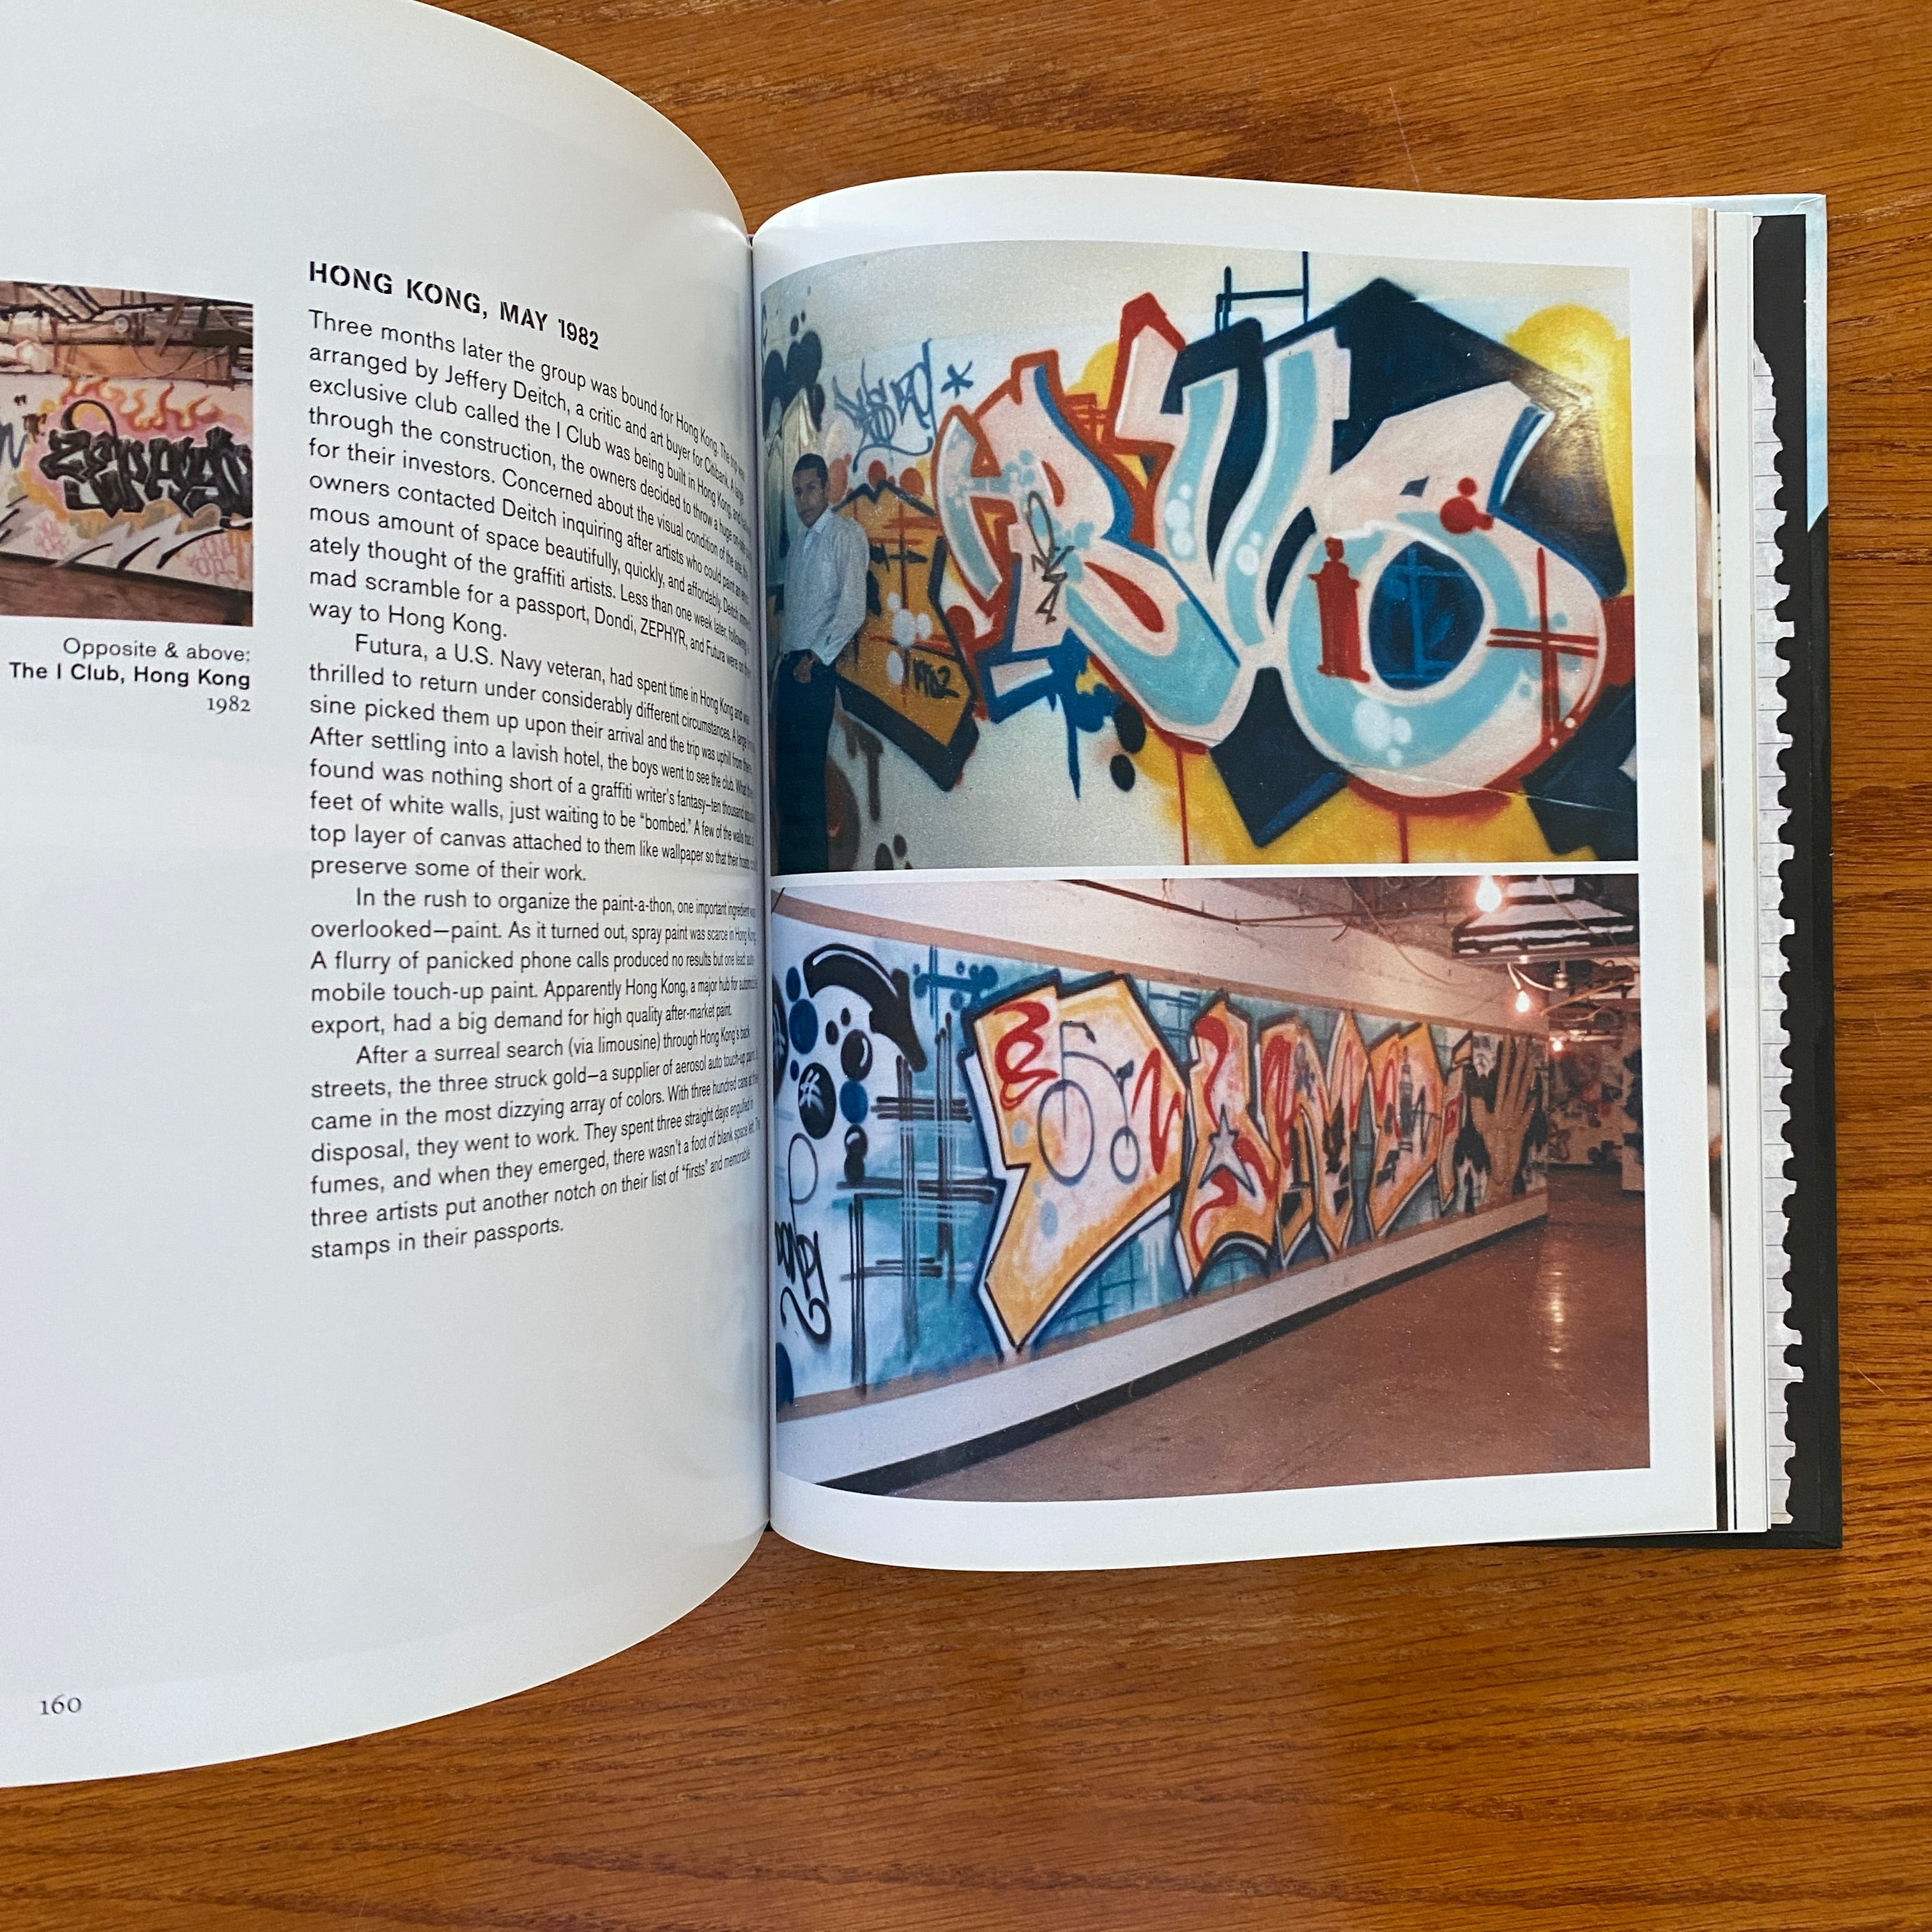 Dondi White Style Master General: The Life of Graffiti Artist 